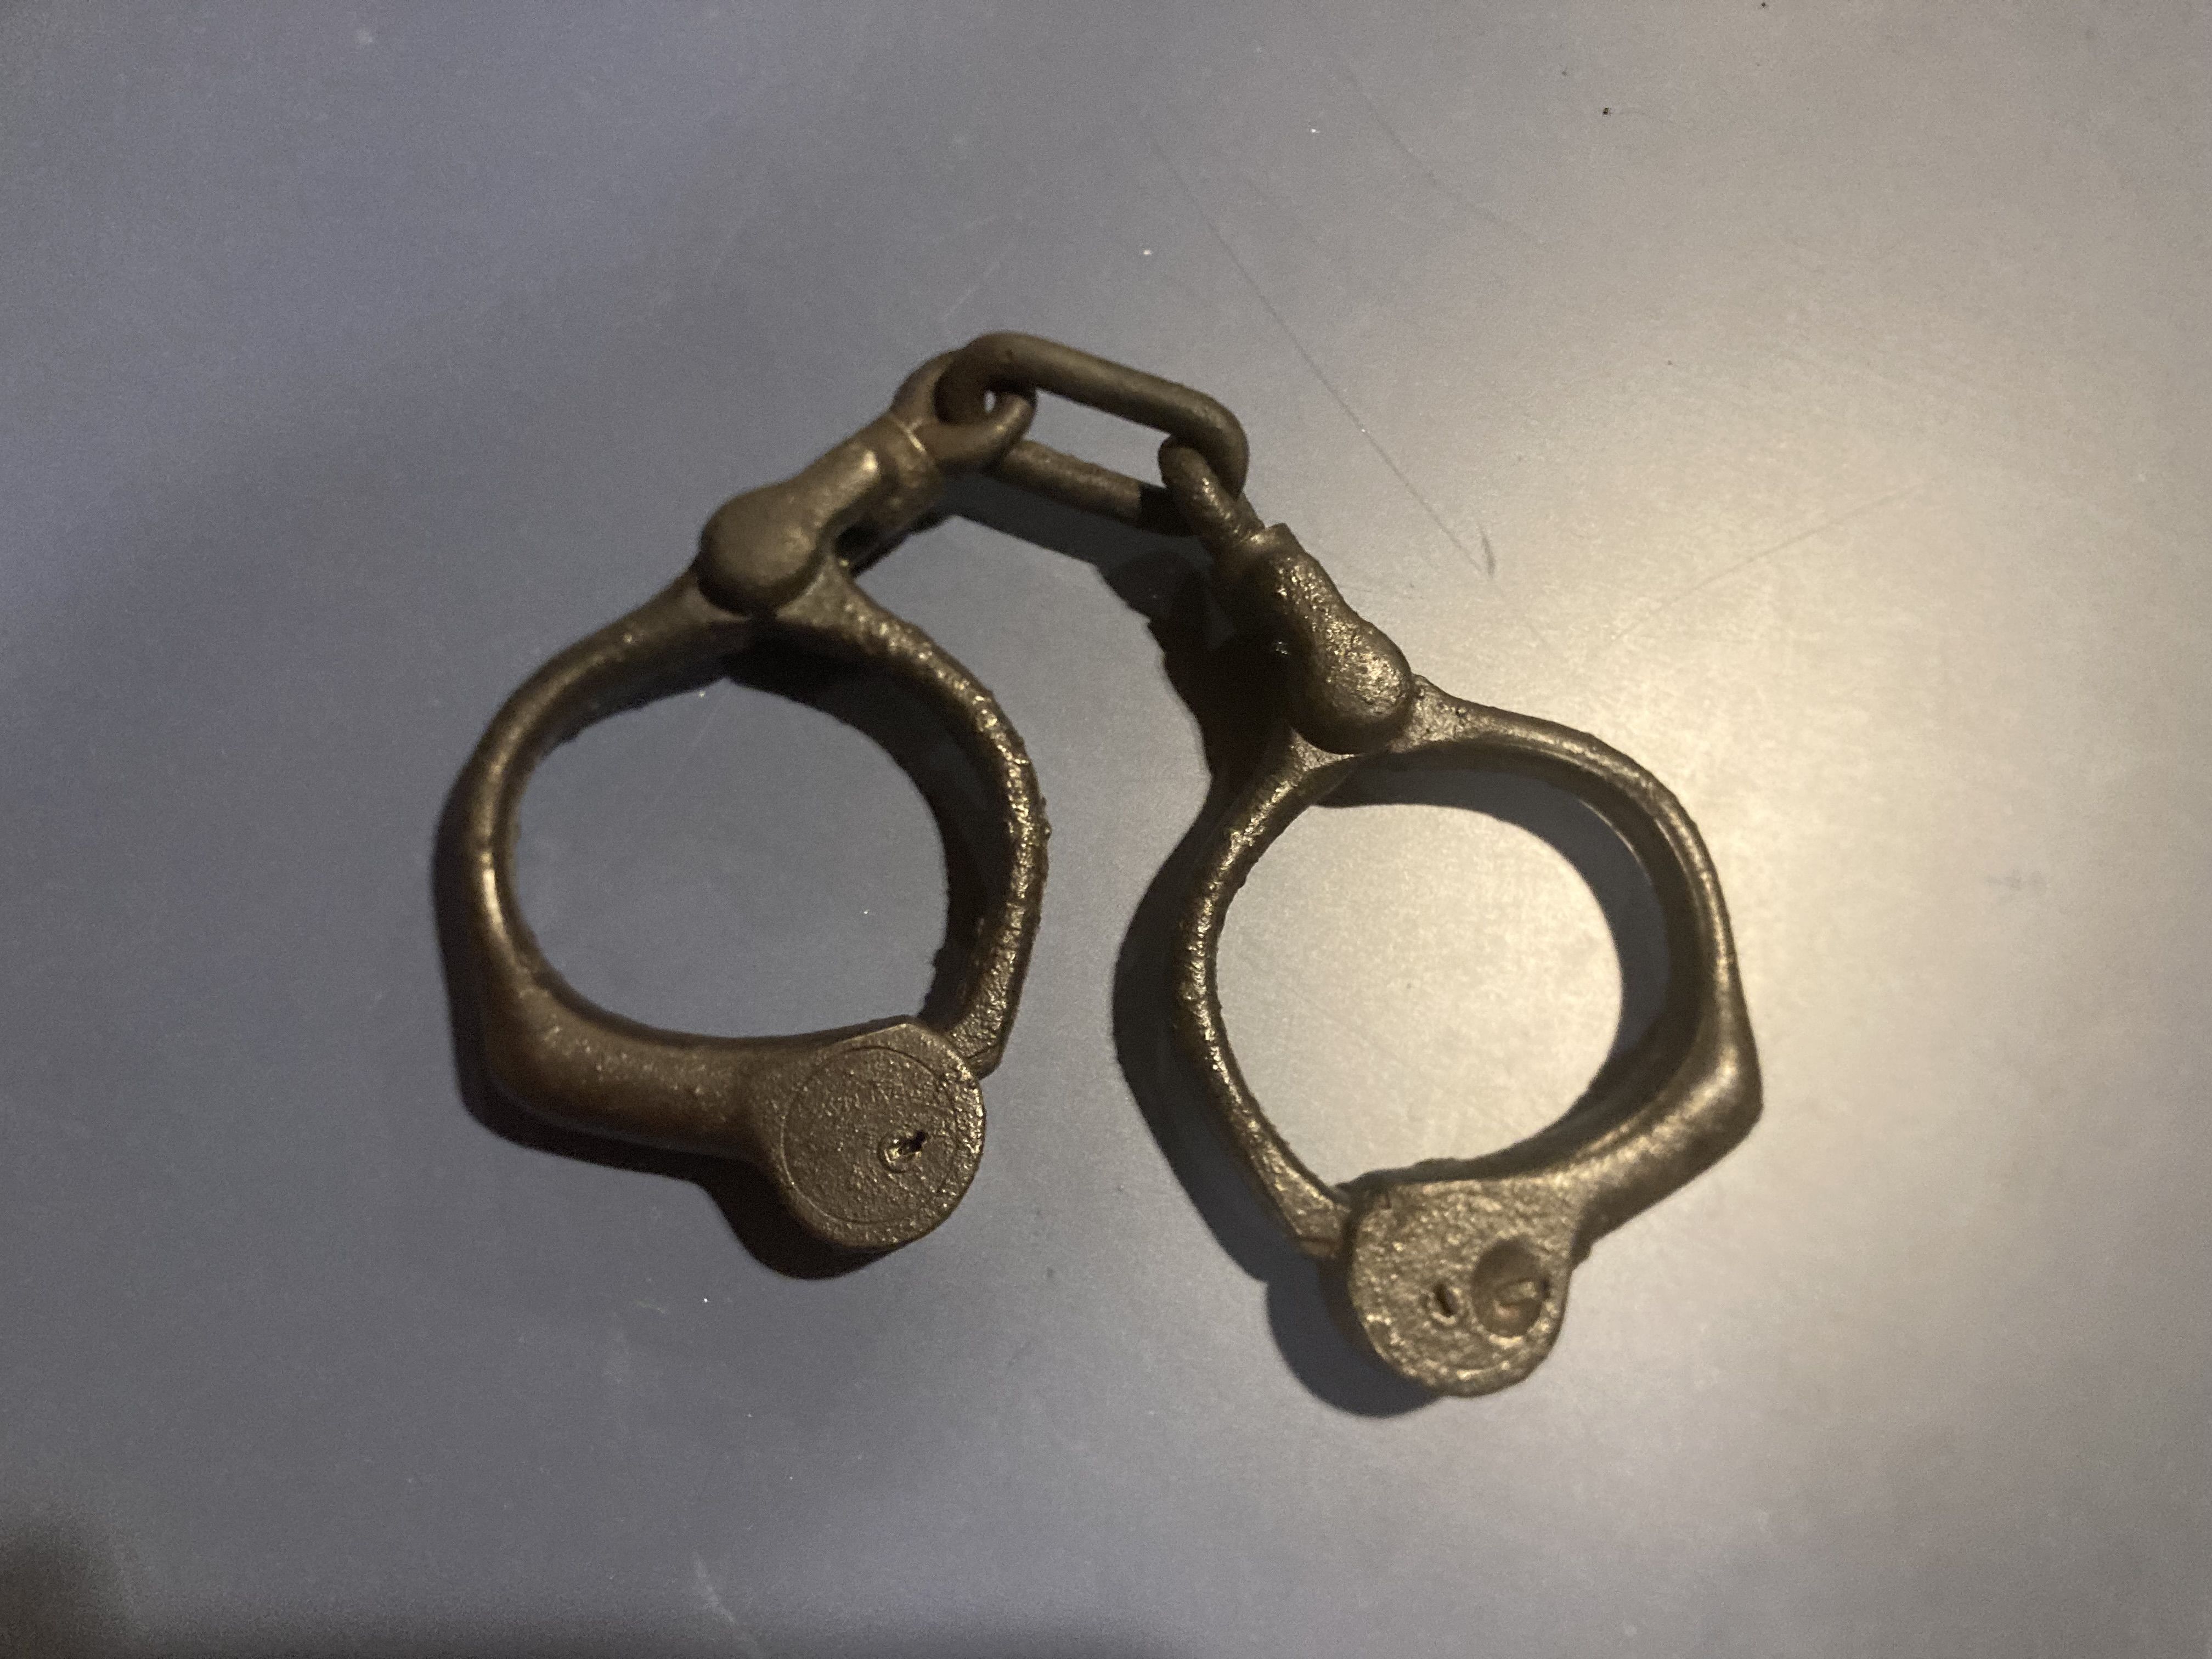 1899 handcuffs found on Native American trade site (Northern Michigan).